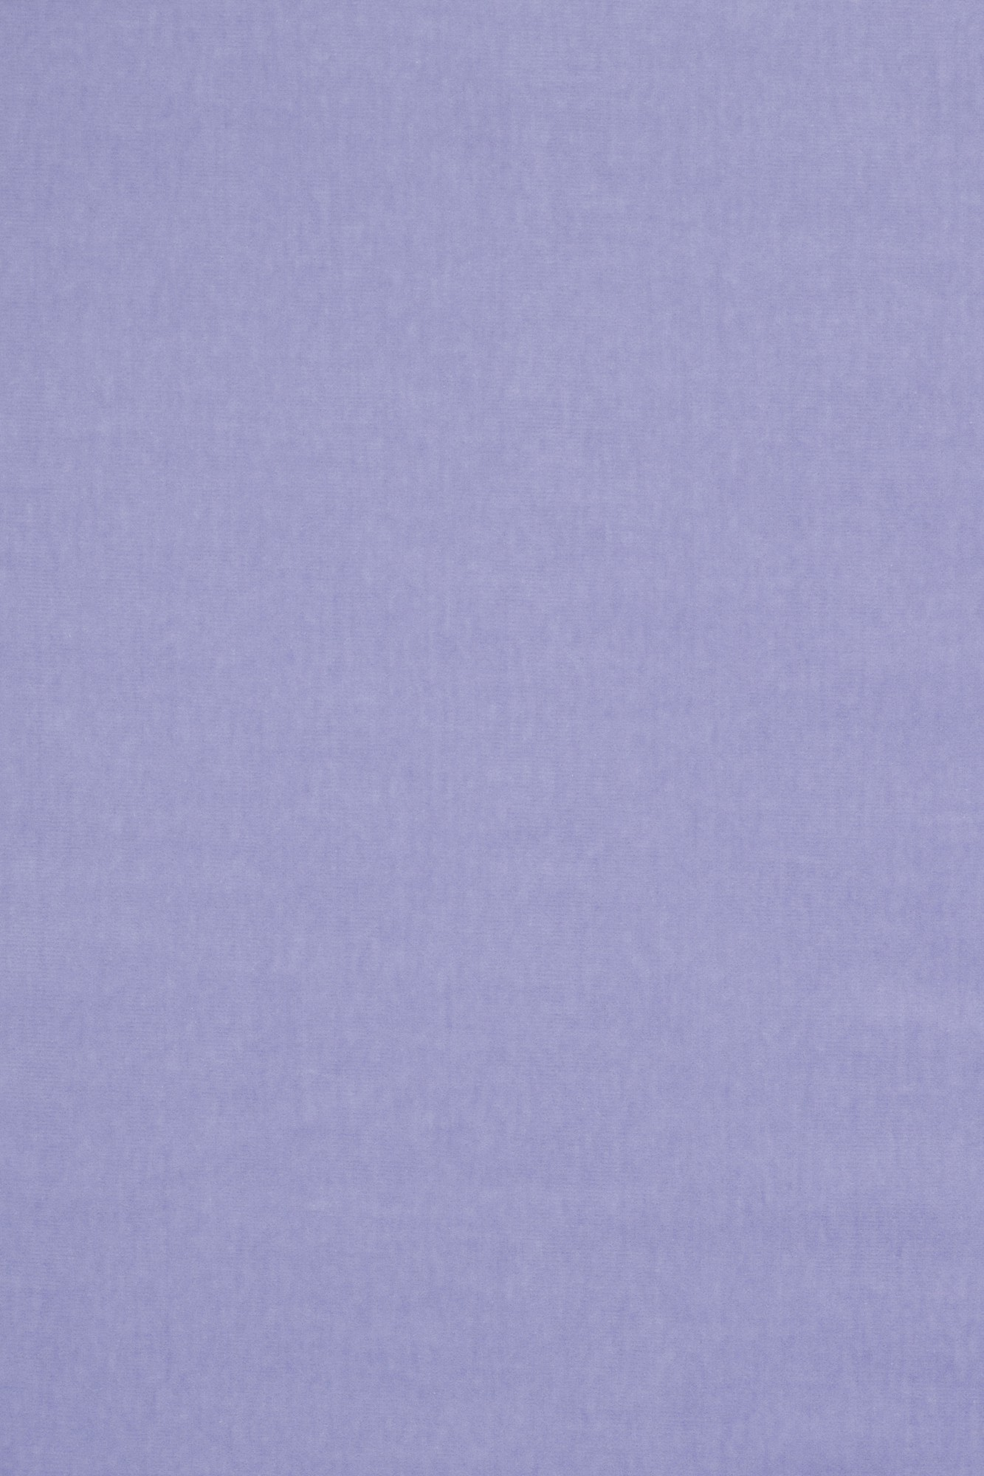 Fabric sample Harald 3 632 purple